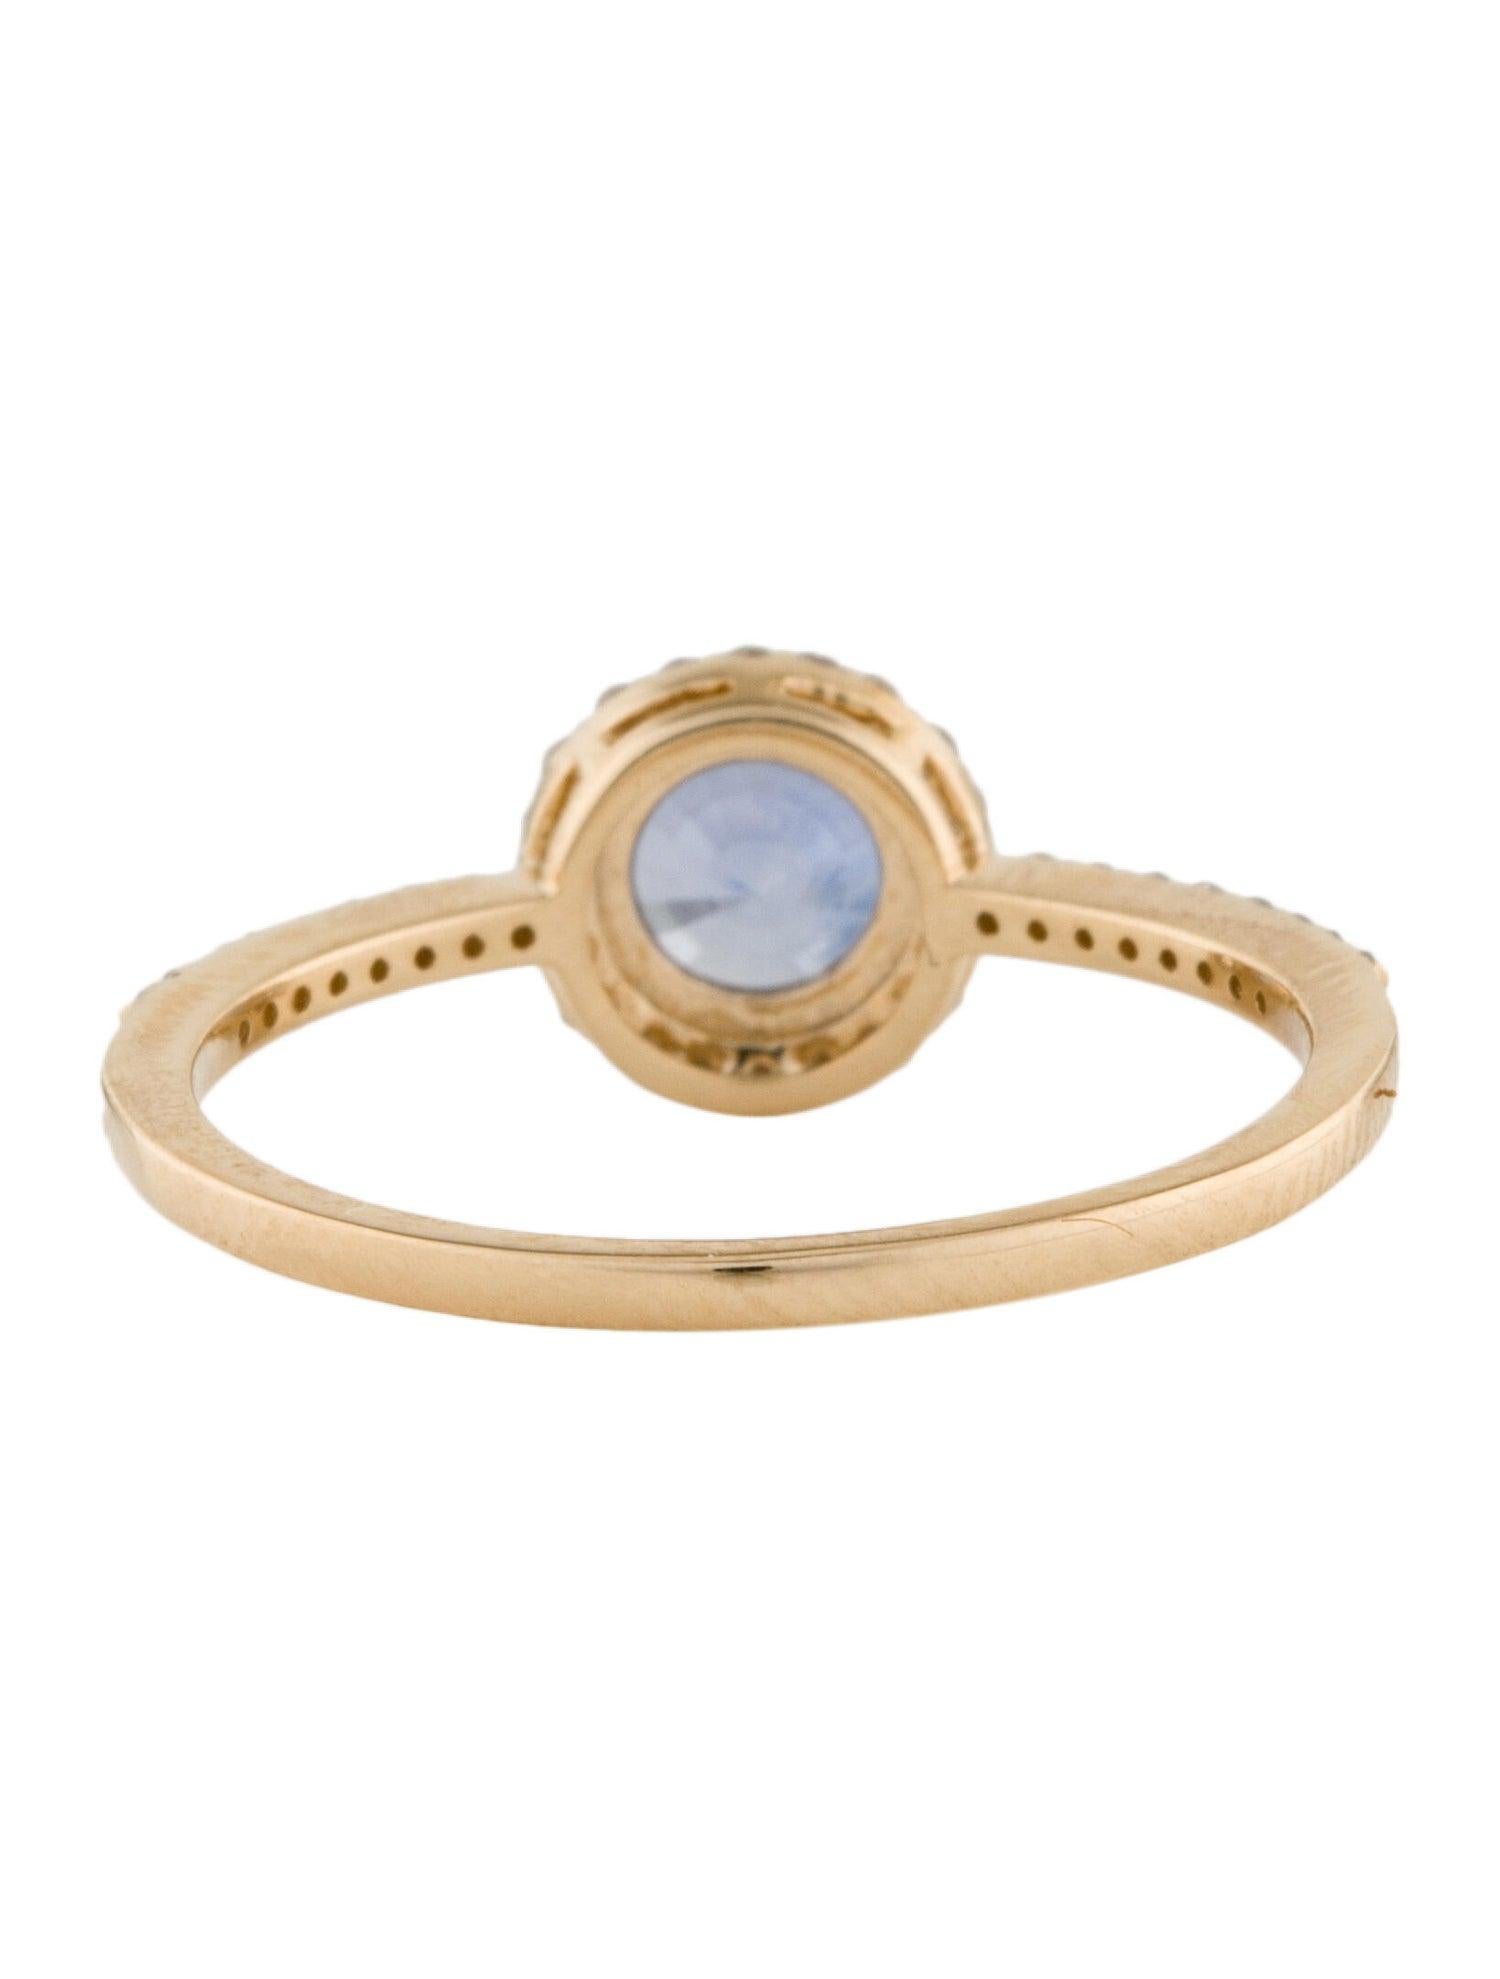 Brilliant Cut 14K Sapphire & Diamond Cocktail Ring - Size 6.75 - Elegant Statement Jewelry For Sale